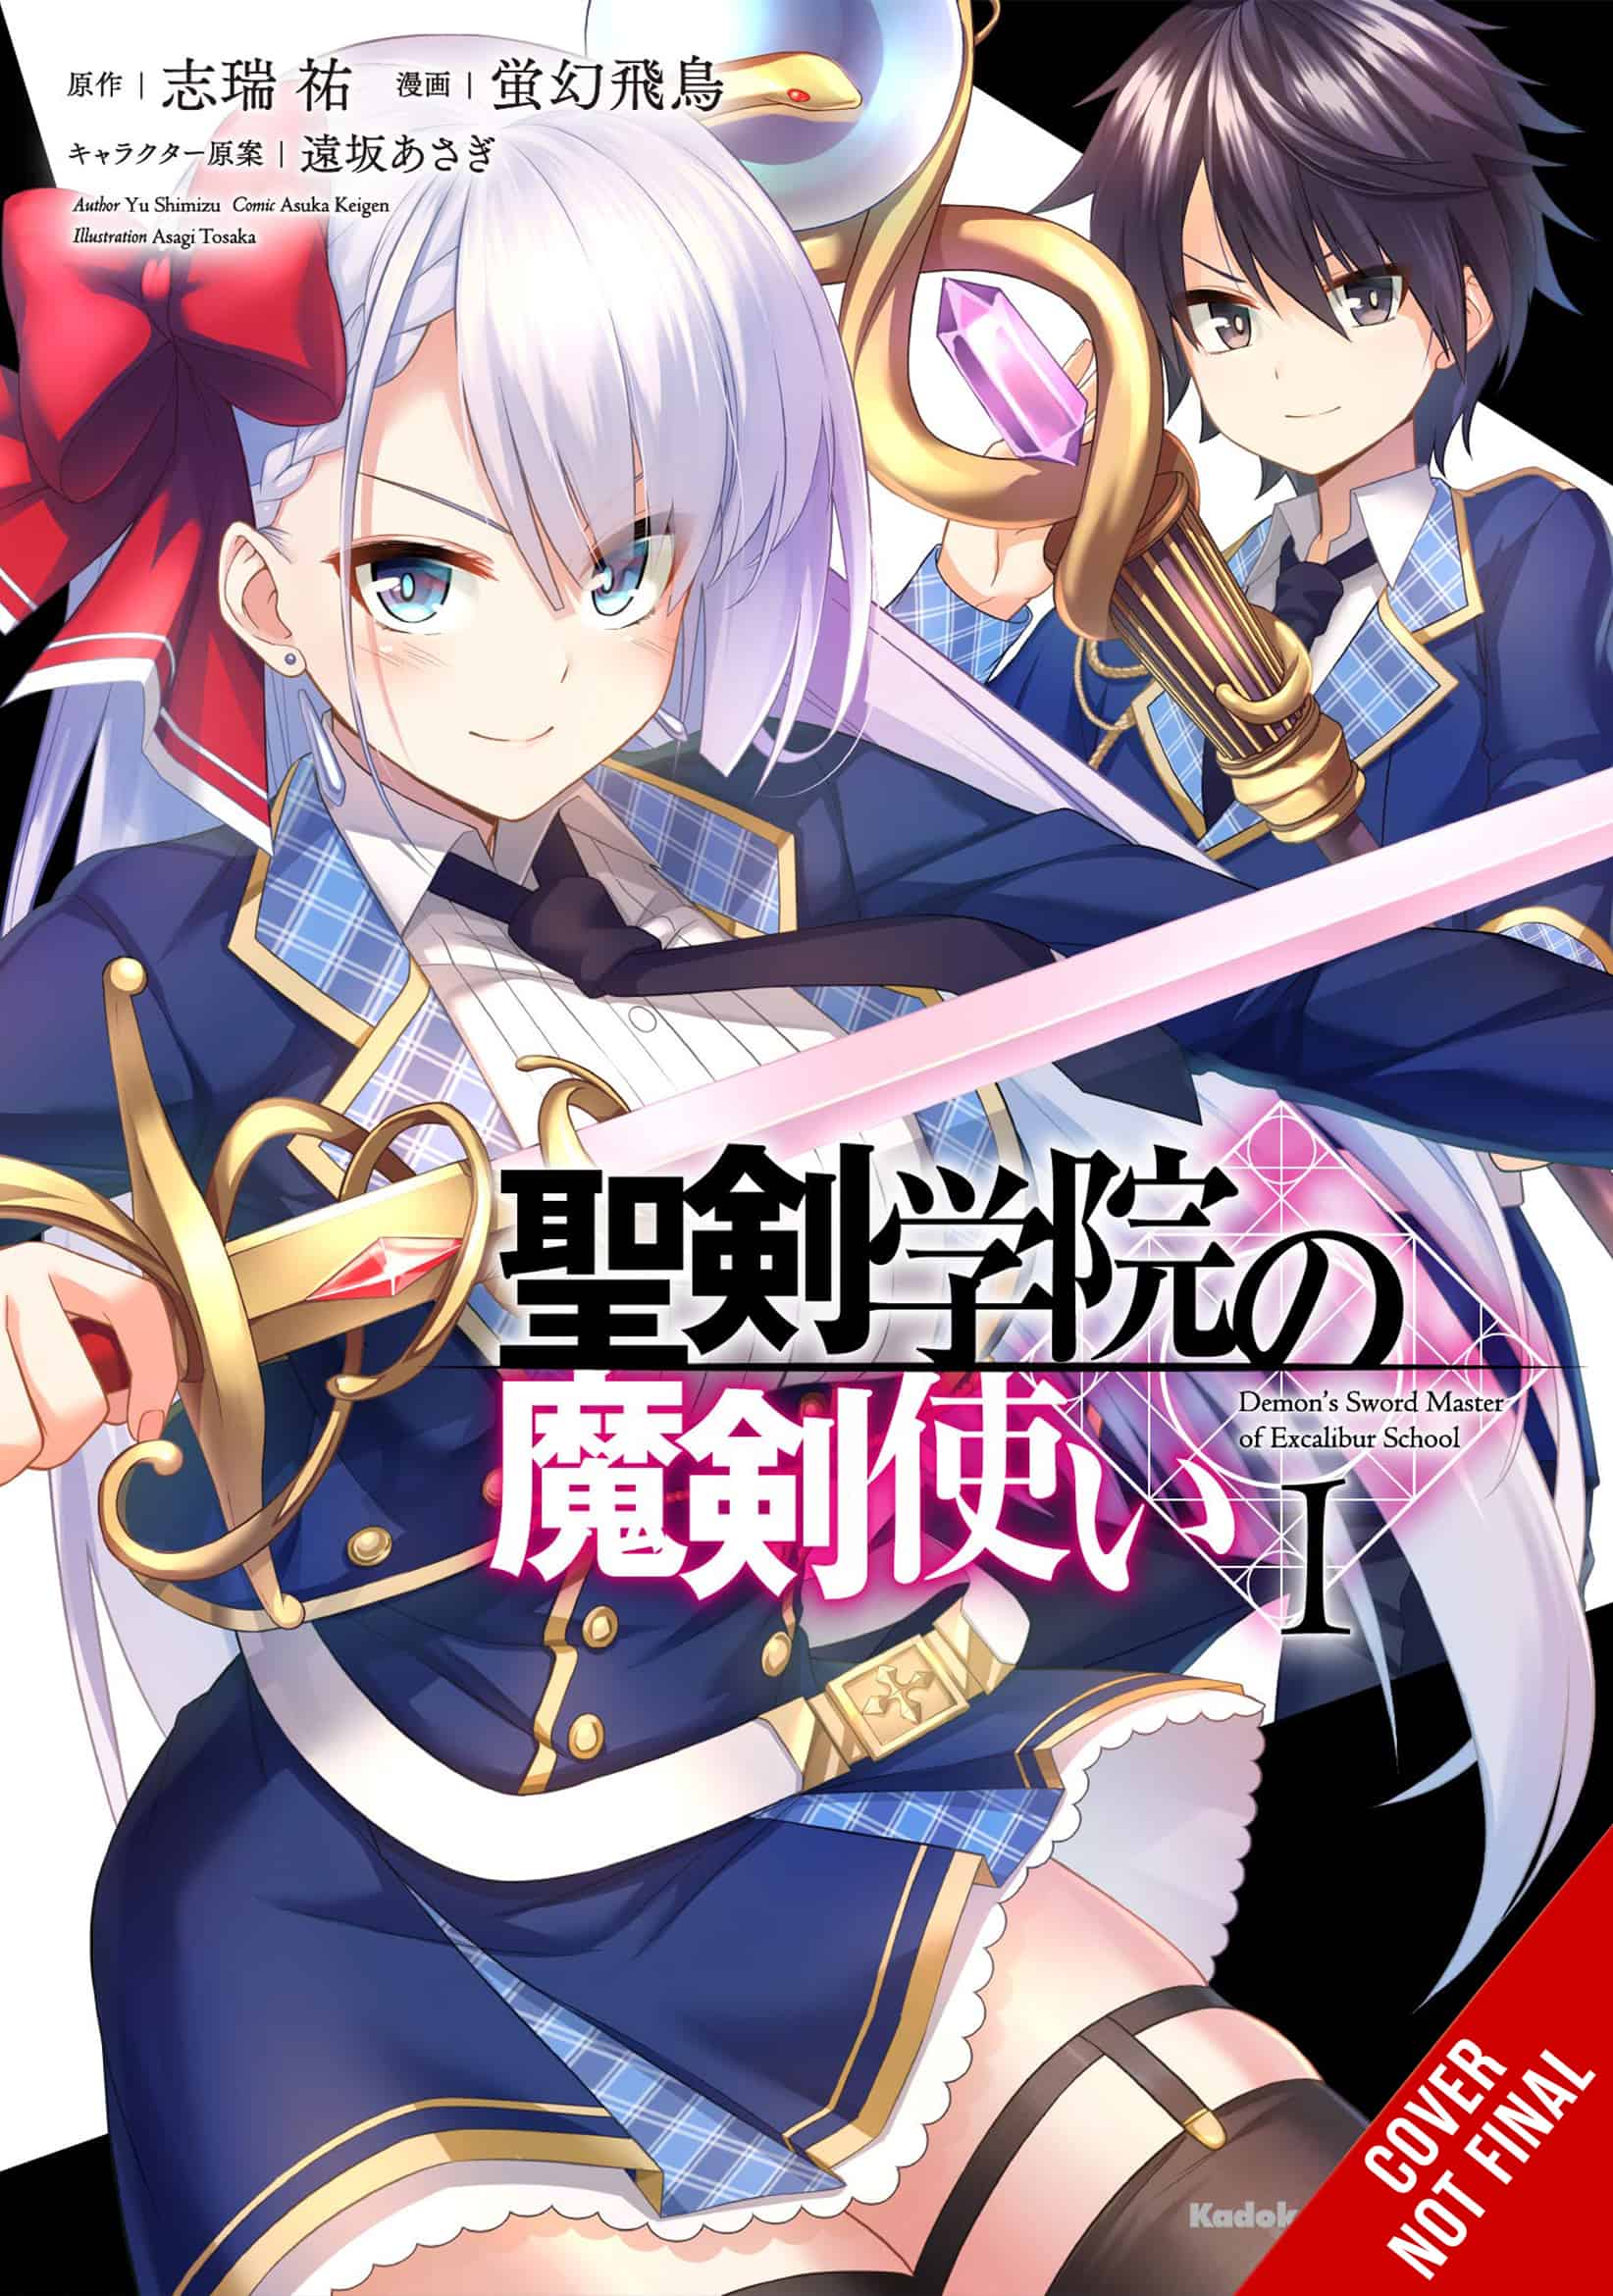 Yen Press Licenses Sword Art Online Progressive Canon of the Golden Rule  Manga, Classroom for Heroes Light Novels, 13 More Titles (Updated) - News -  Anime News Network